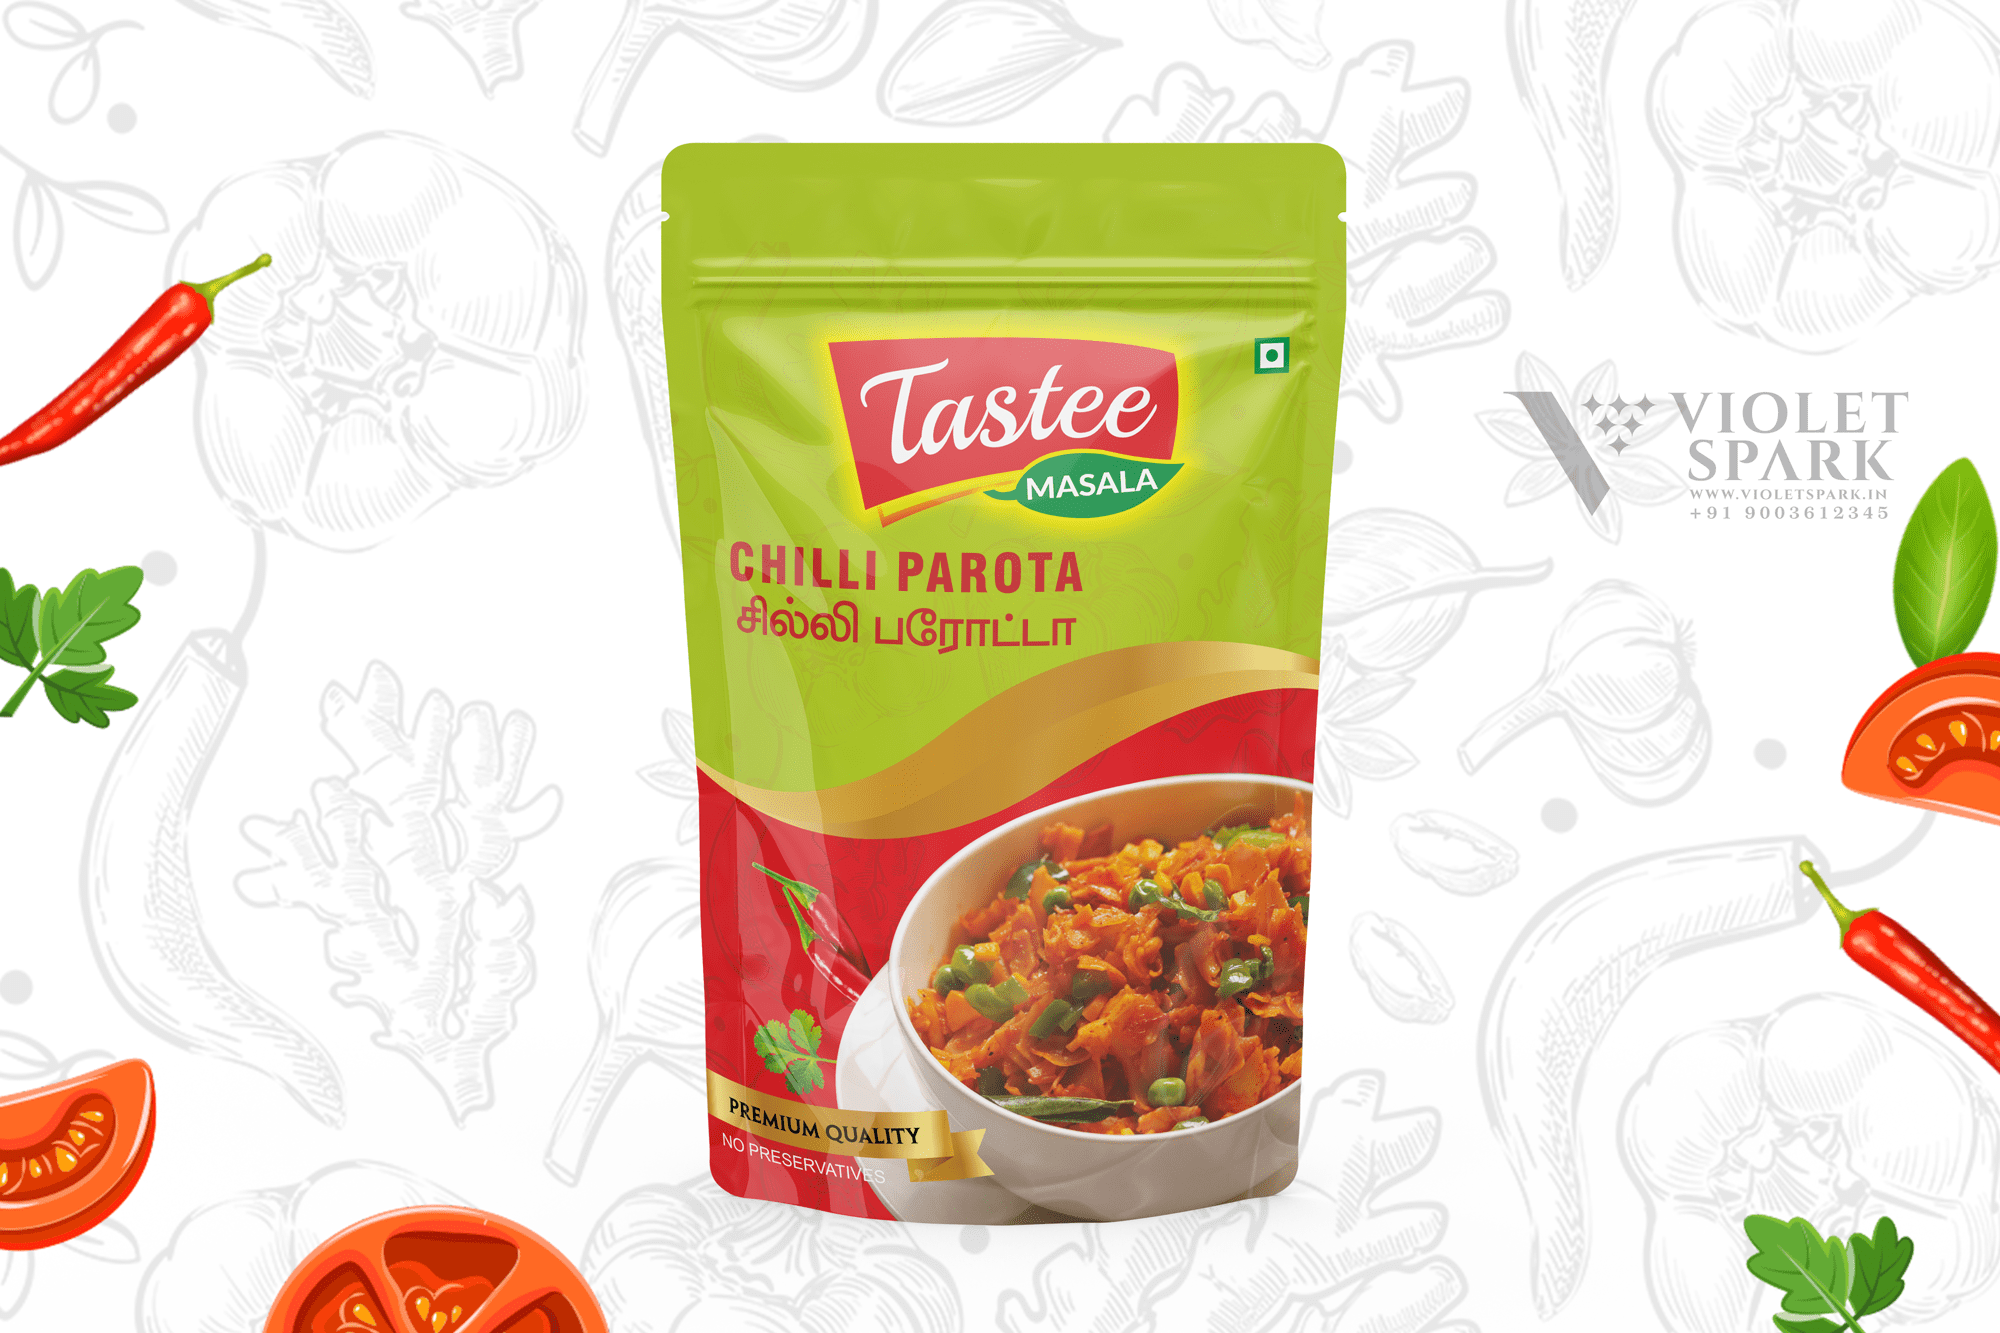 Tastee Masala Brand Chilli Parotta Pouch Packaging Design in Chennai by Violet Spark